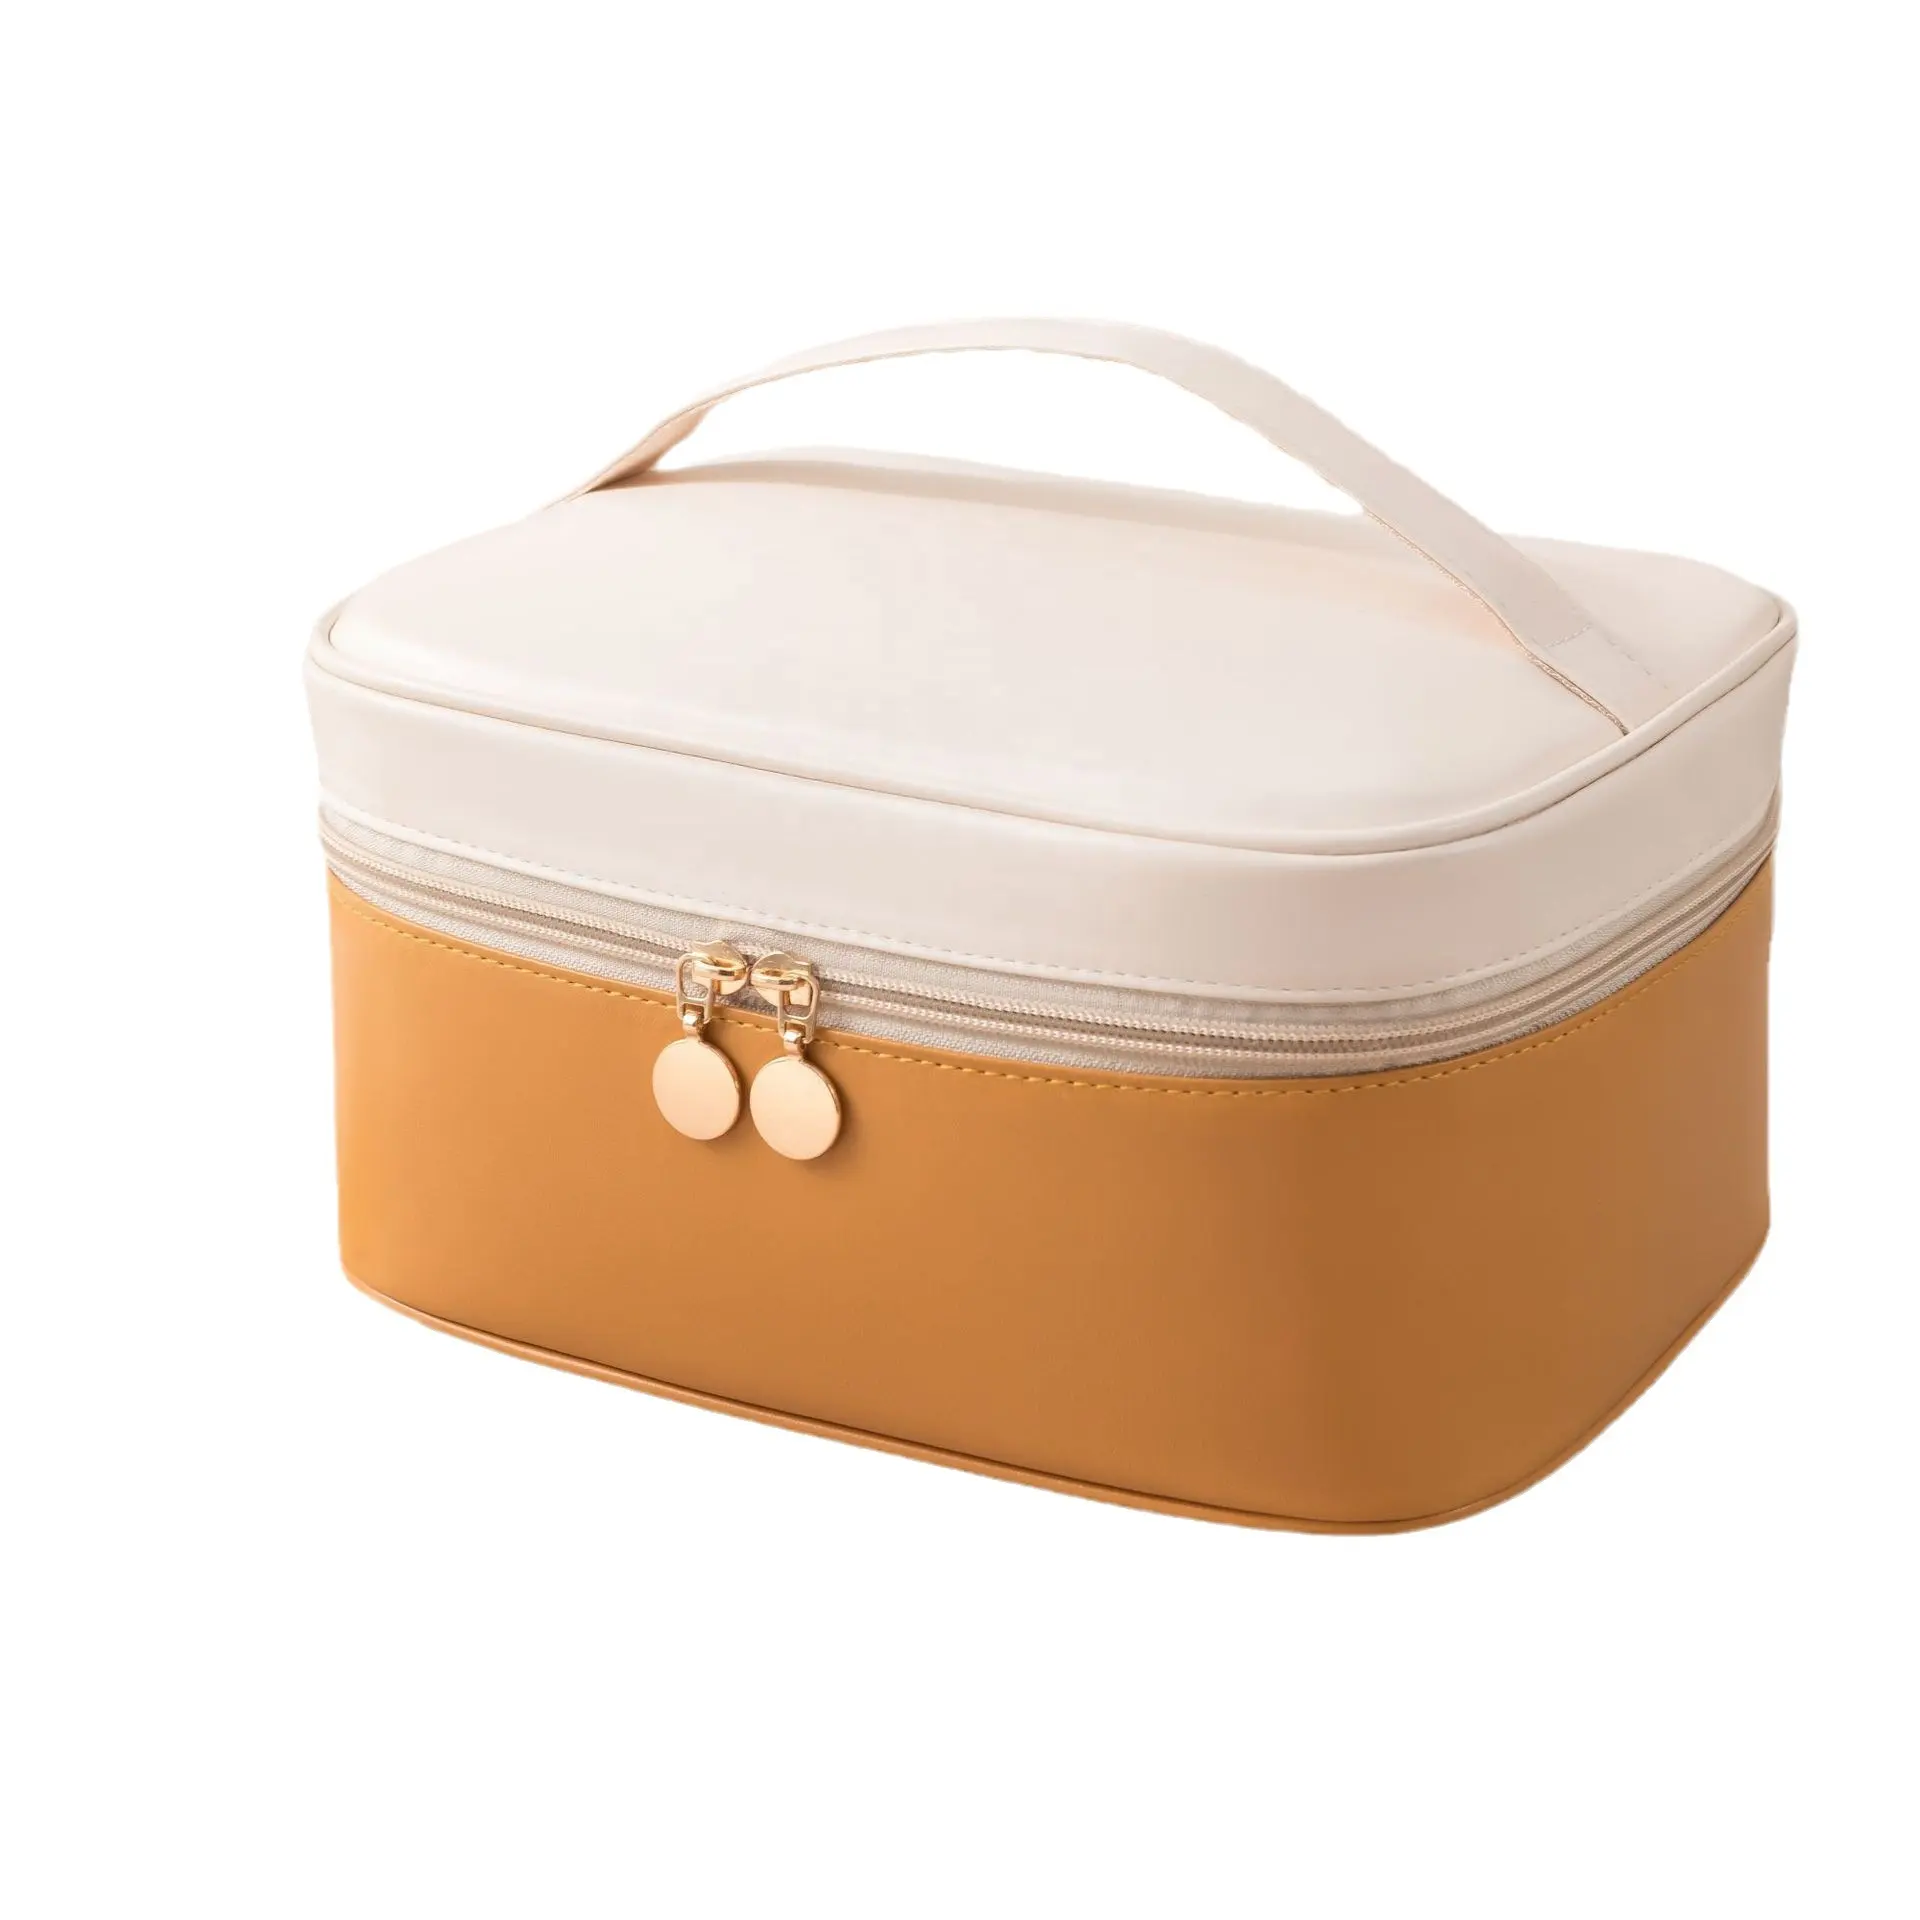 सिम्पैथीबैग थोक चमड़ा प्रसाधन सामग्री बैग अनुकूलित फैशन पु टॉयलेटरी चमड़ा यात्रा कॉस्मेटिक बैग पाउच मेकअप बैग